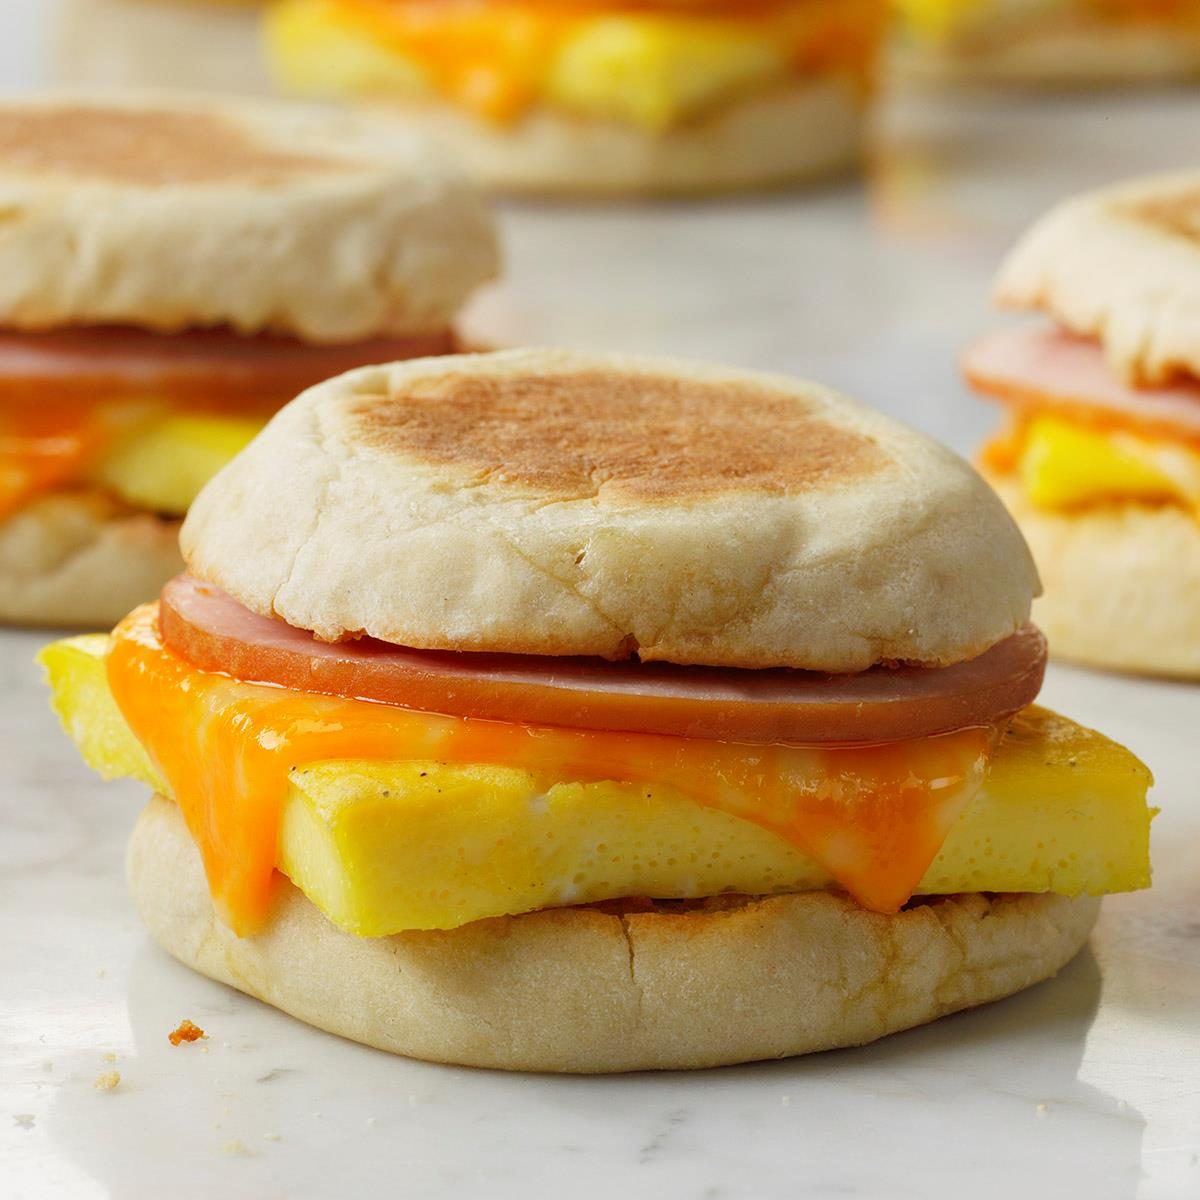 Freezer Breakfast Sandwiches Recipe: How to Make It | Taste of Home